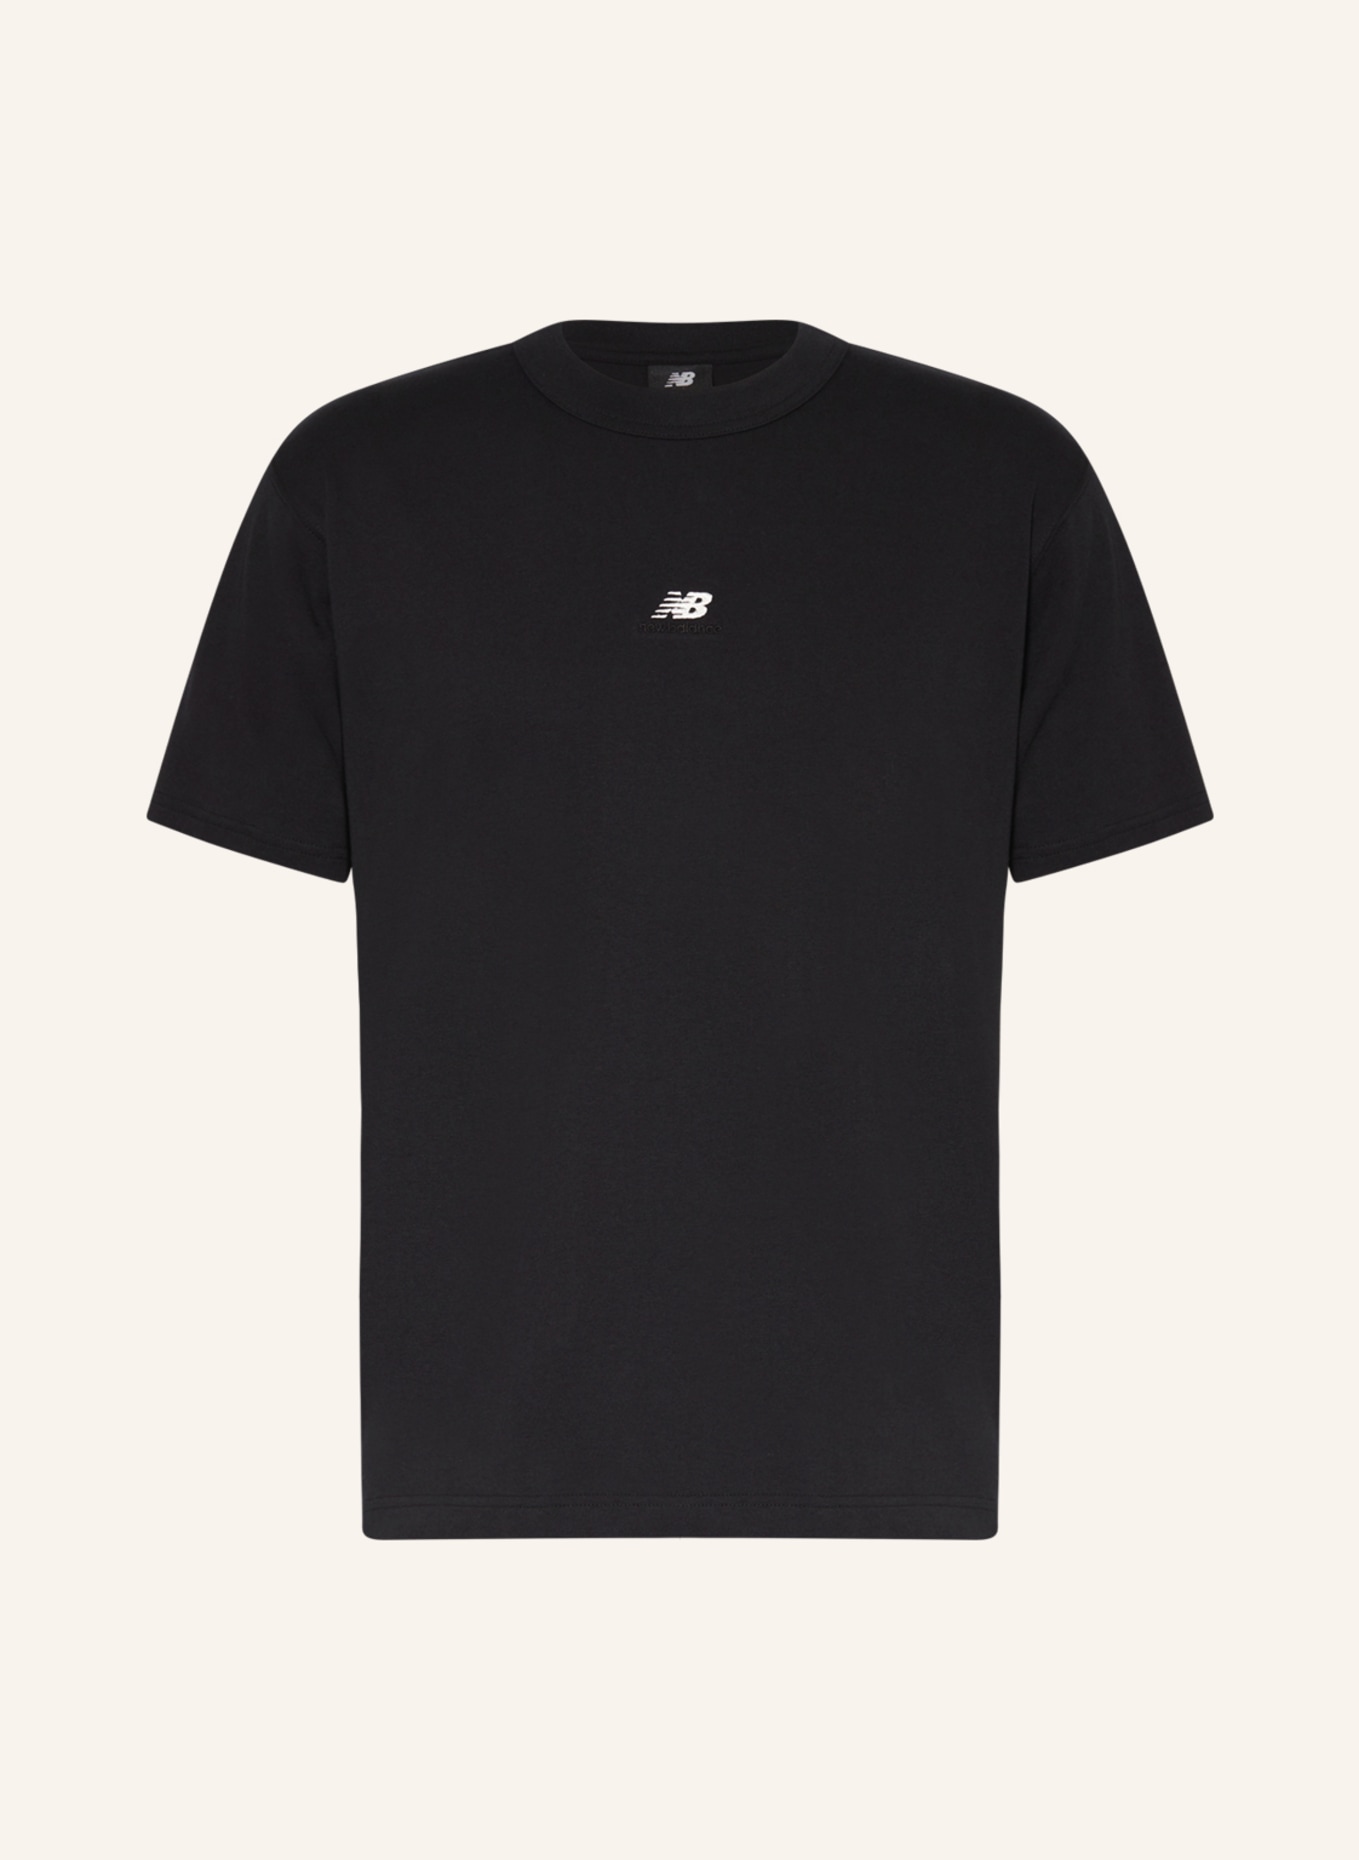 new balance T-shirt ATHLETICS REMASTERED GRAPHIC black in